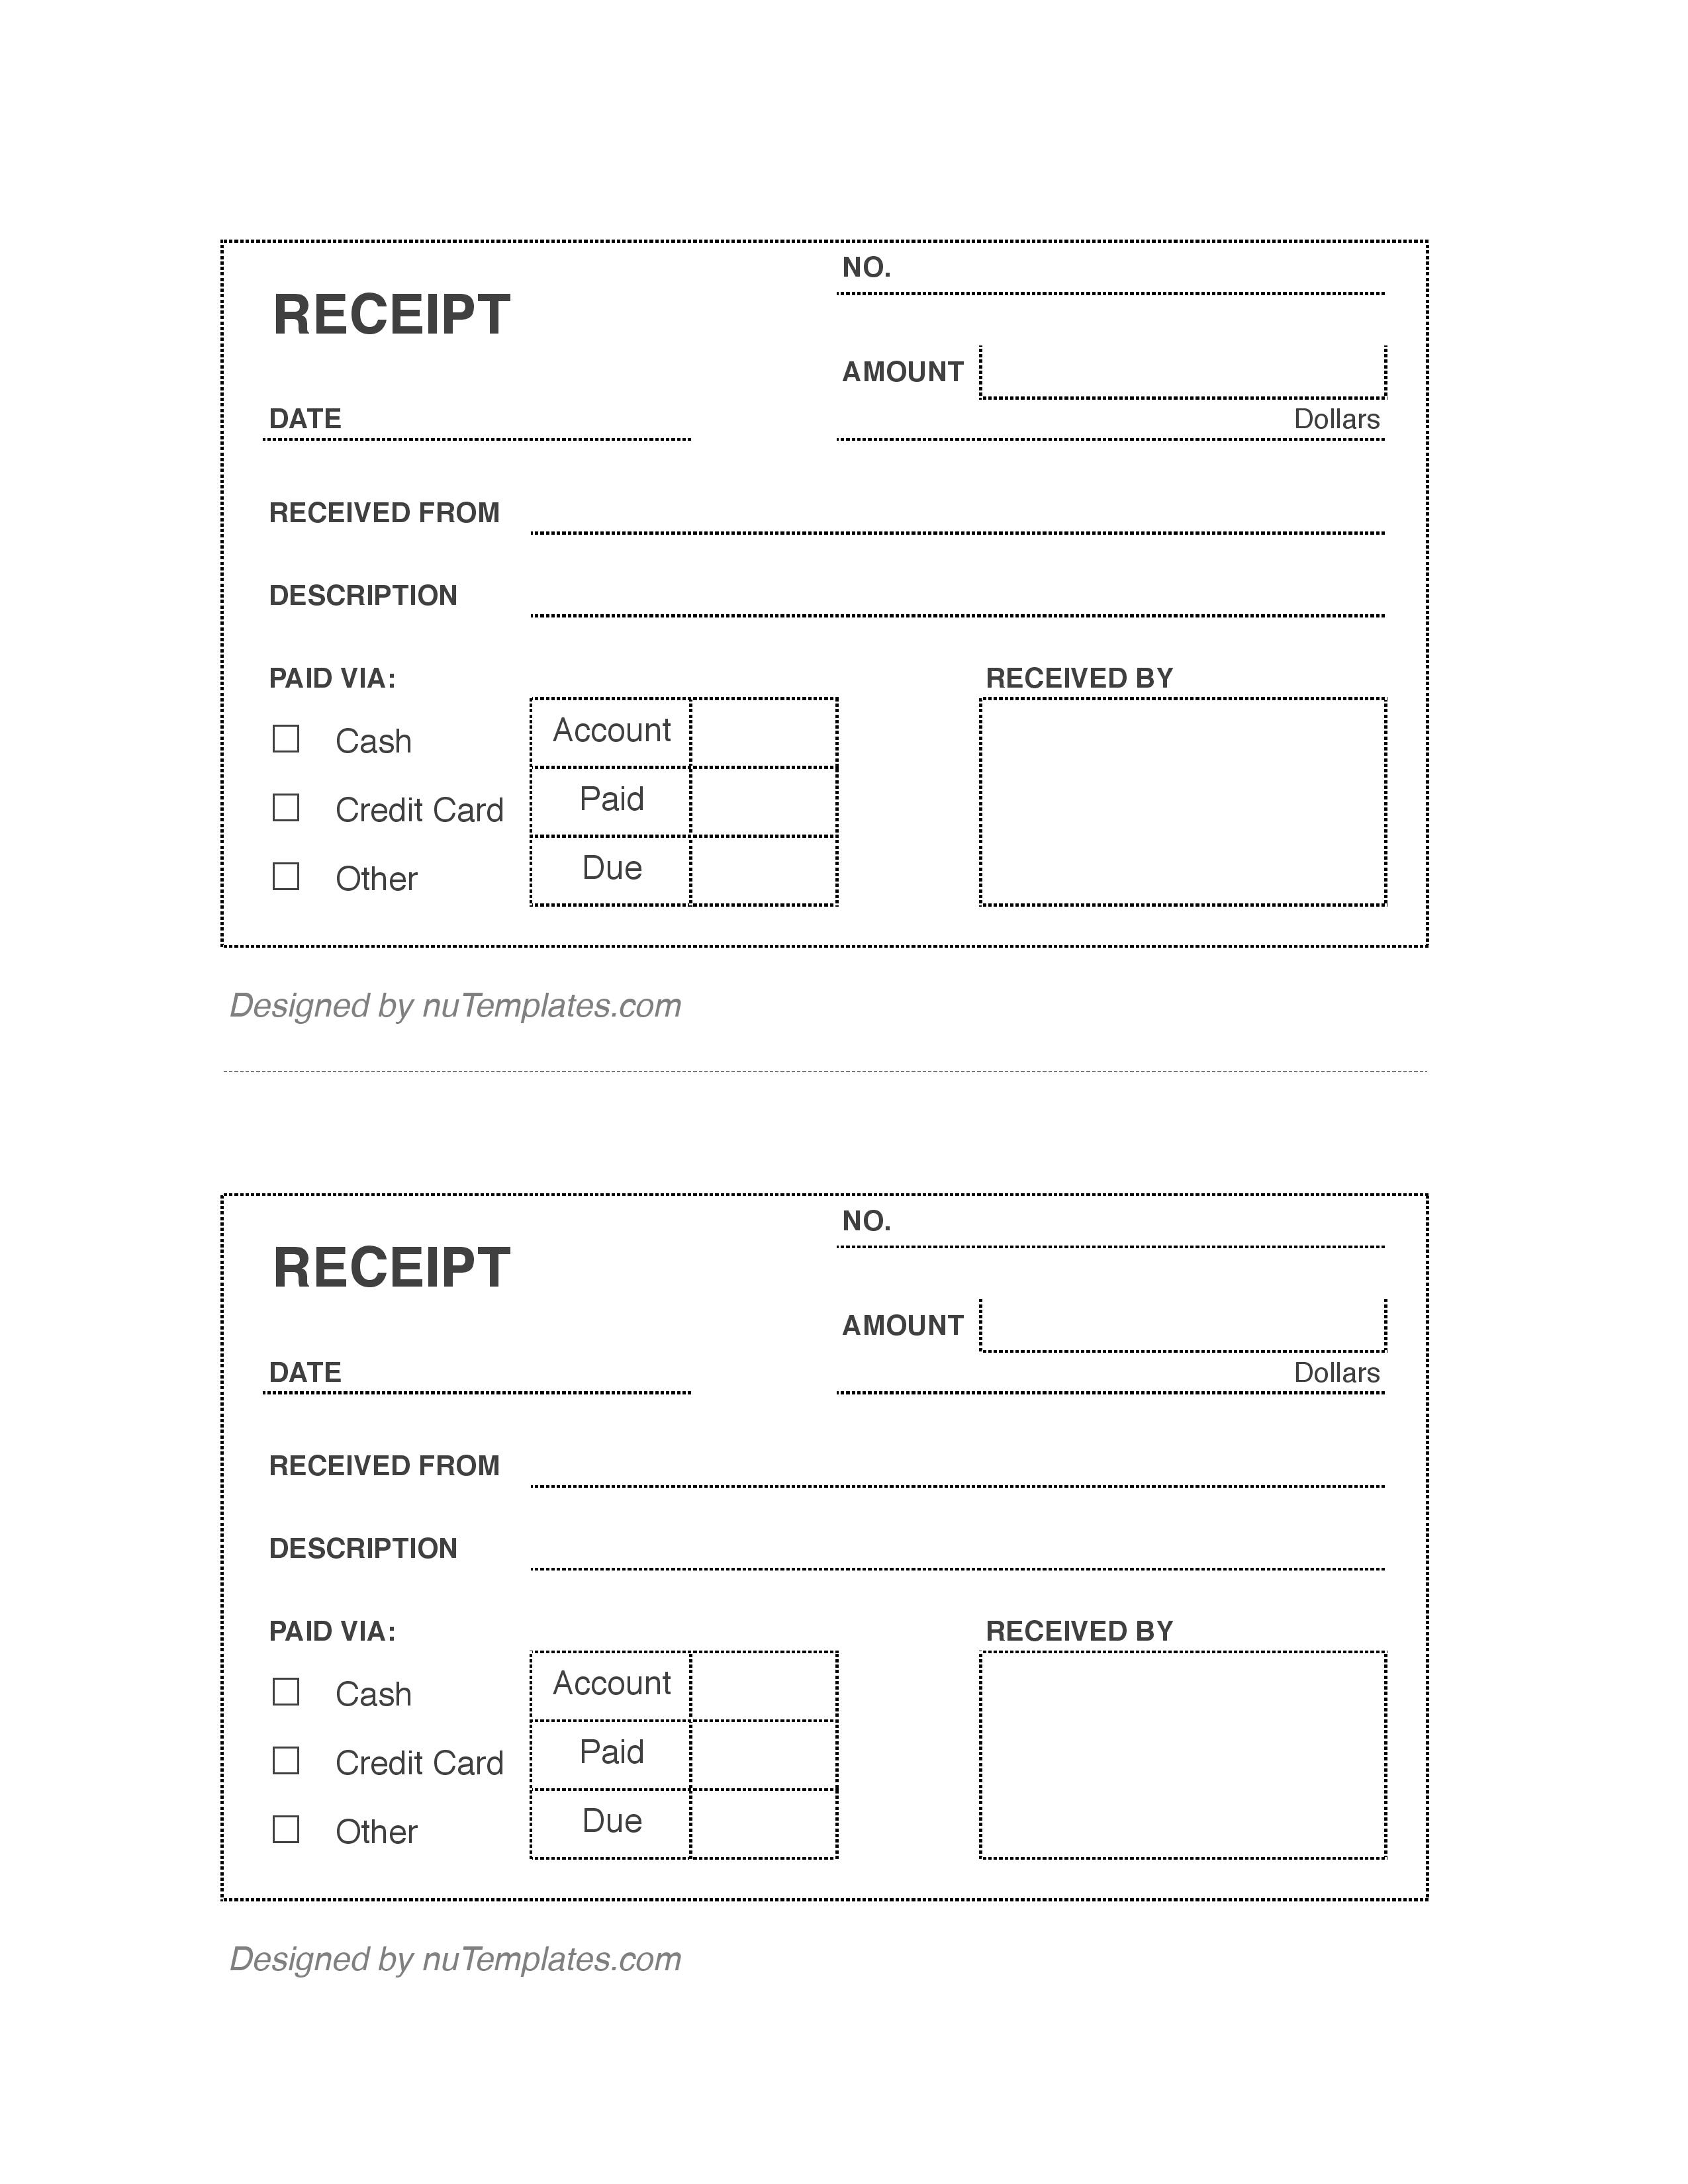 Blank Receipt Template - Blank Receipts | nuTemplates